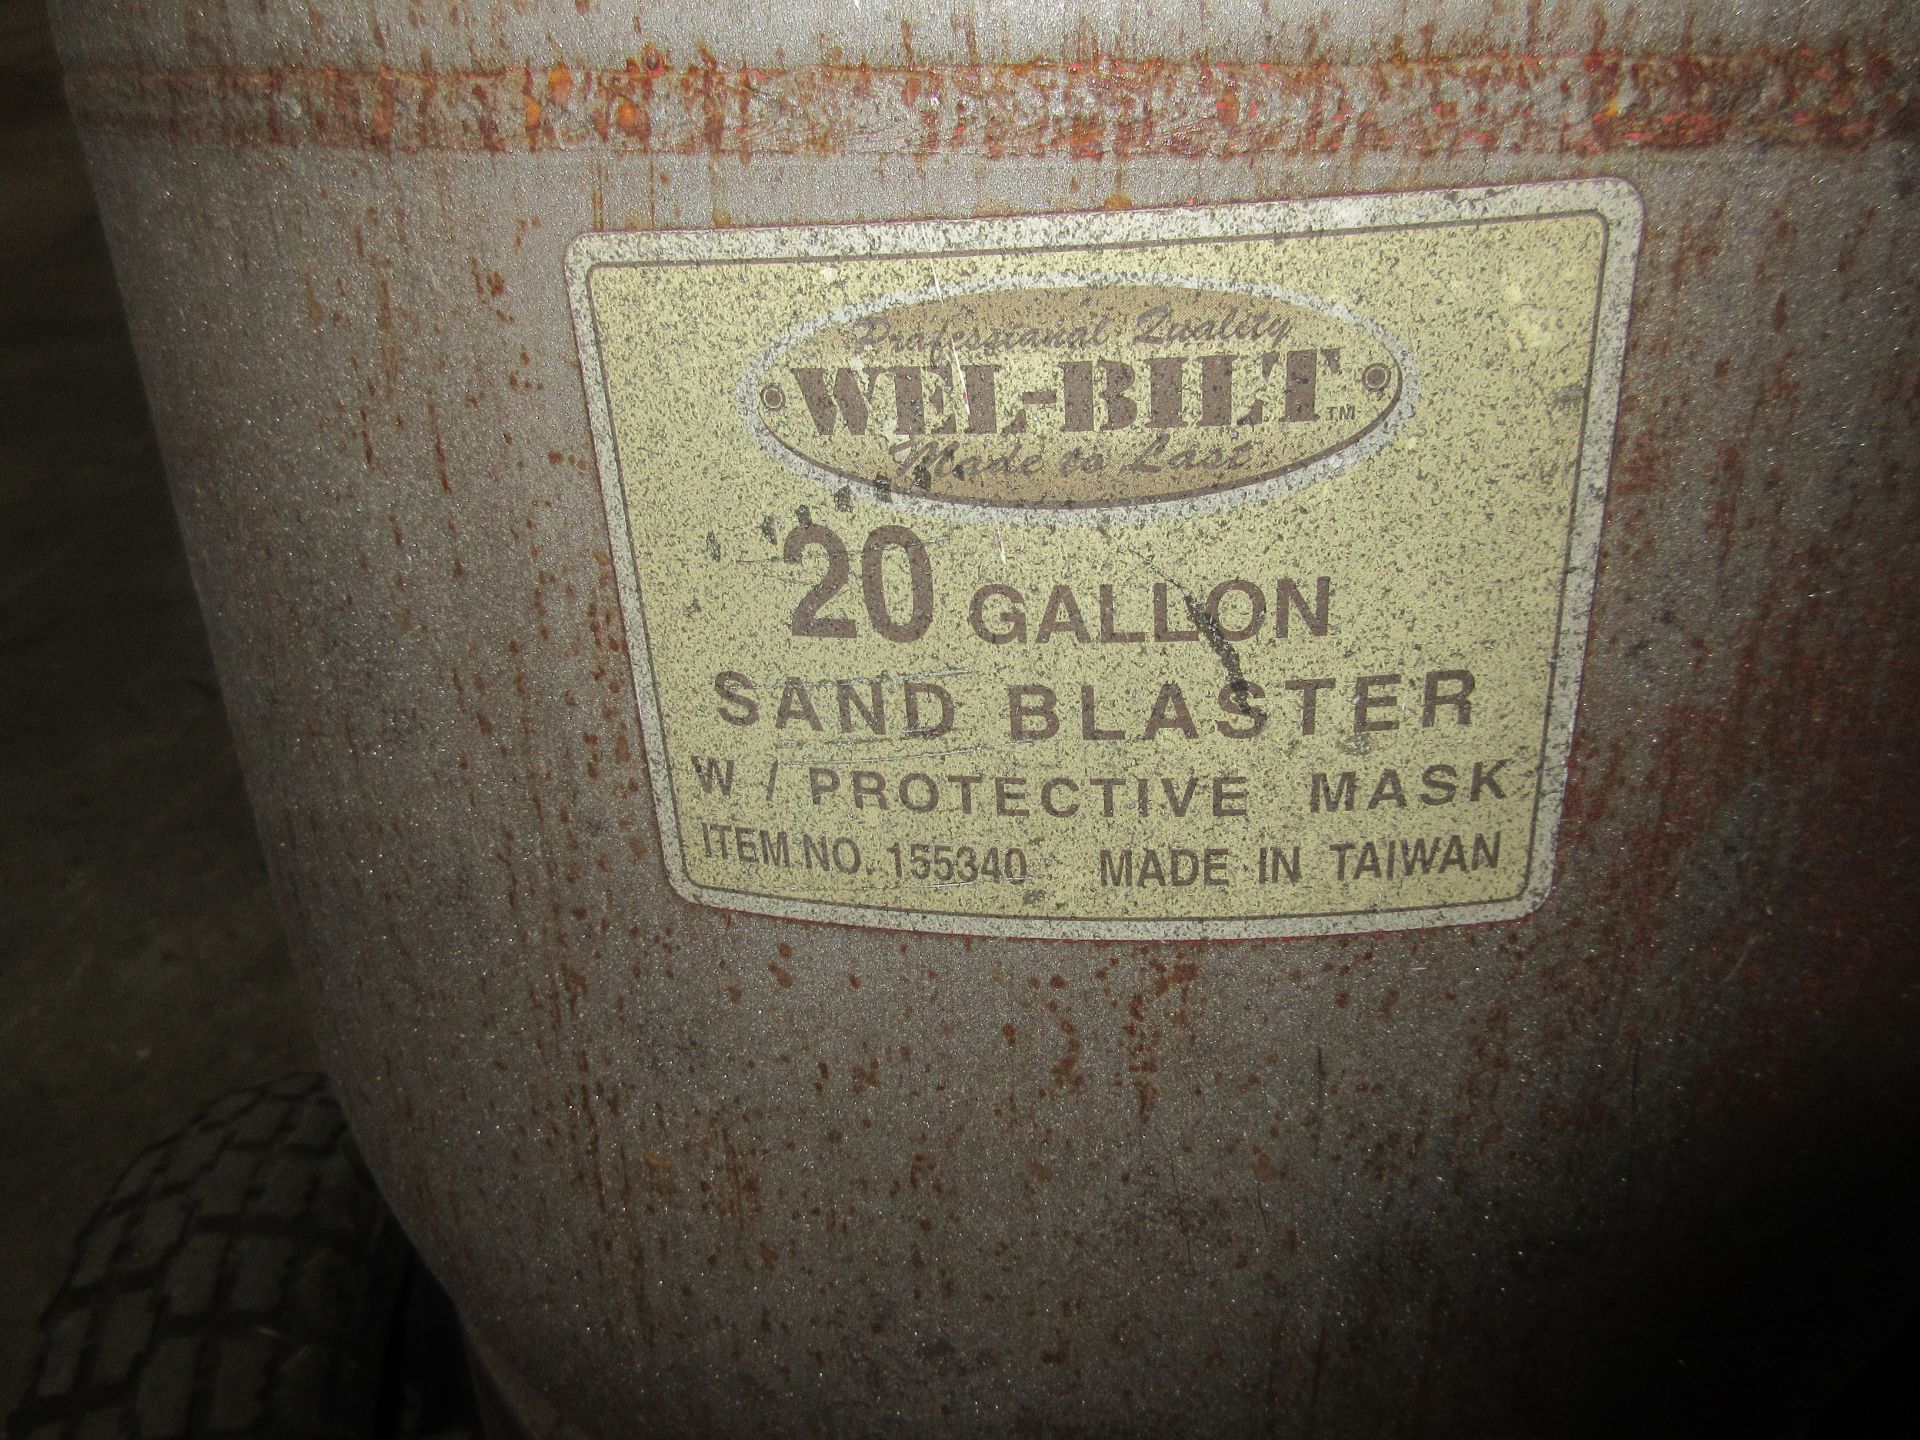 Well Bilt 20 Gal. Portable Sand Blaster - Image 2 of 2